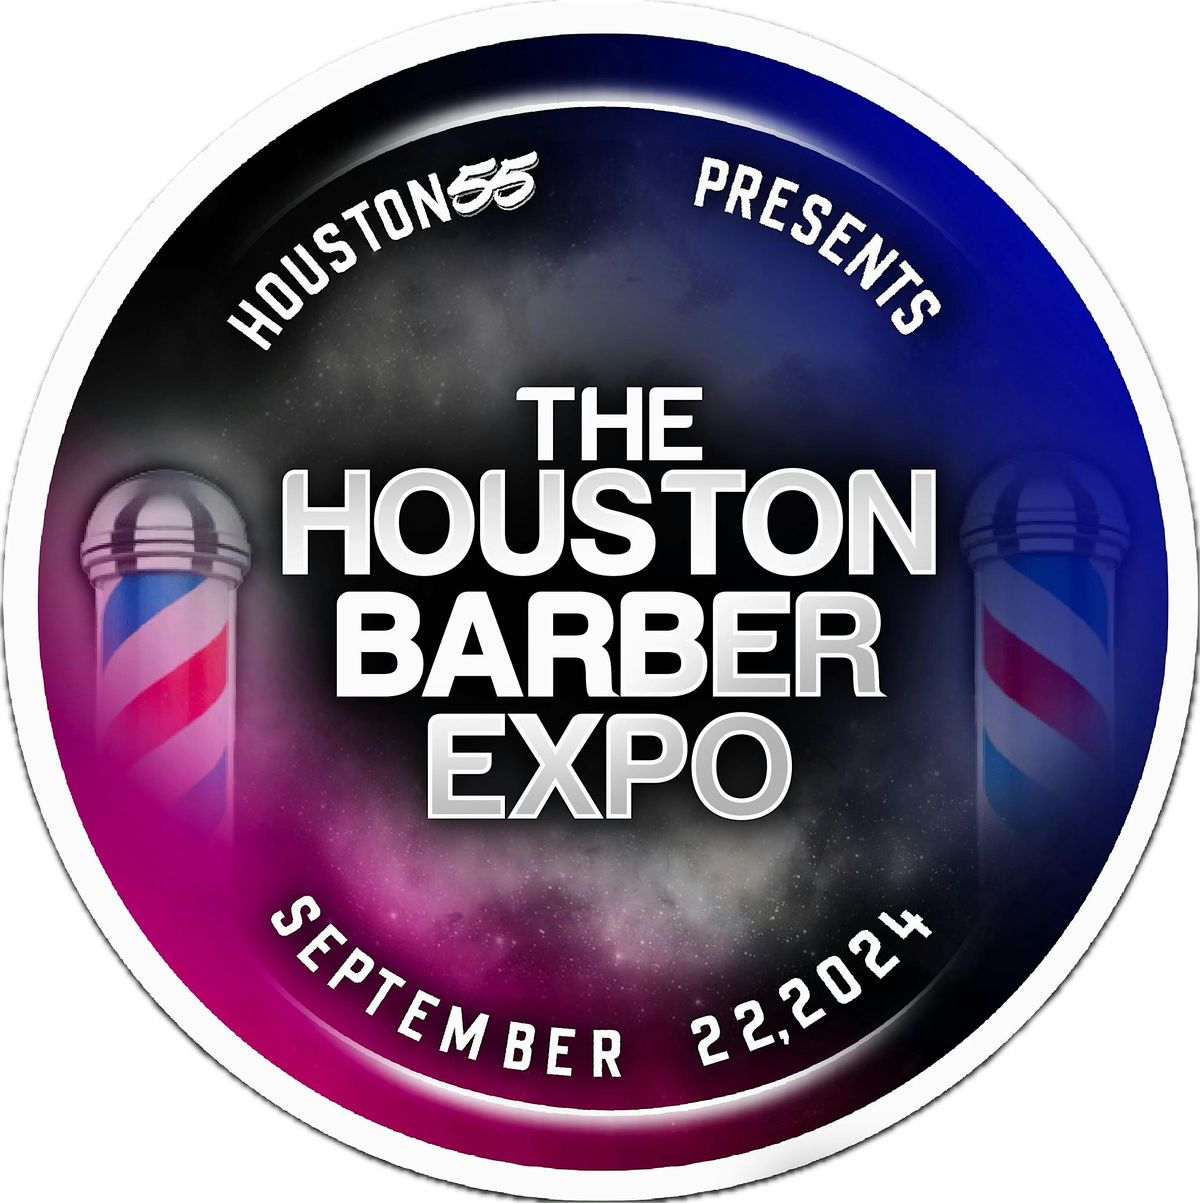 The Houston Barber Expo